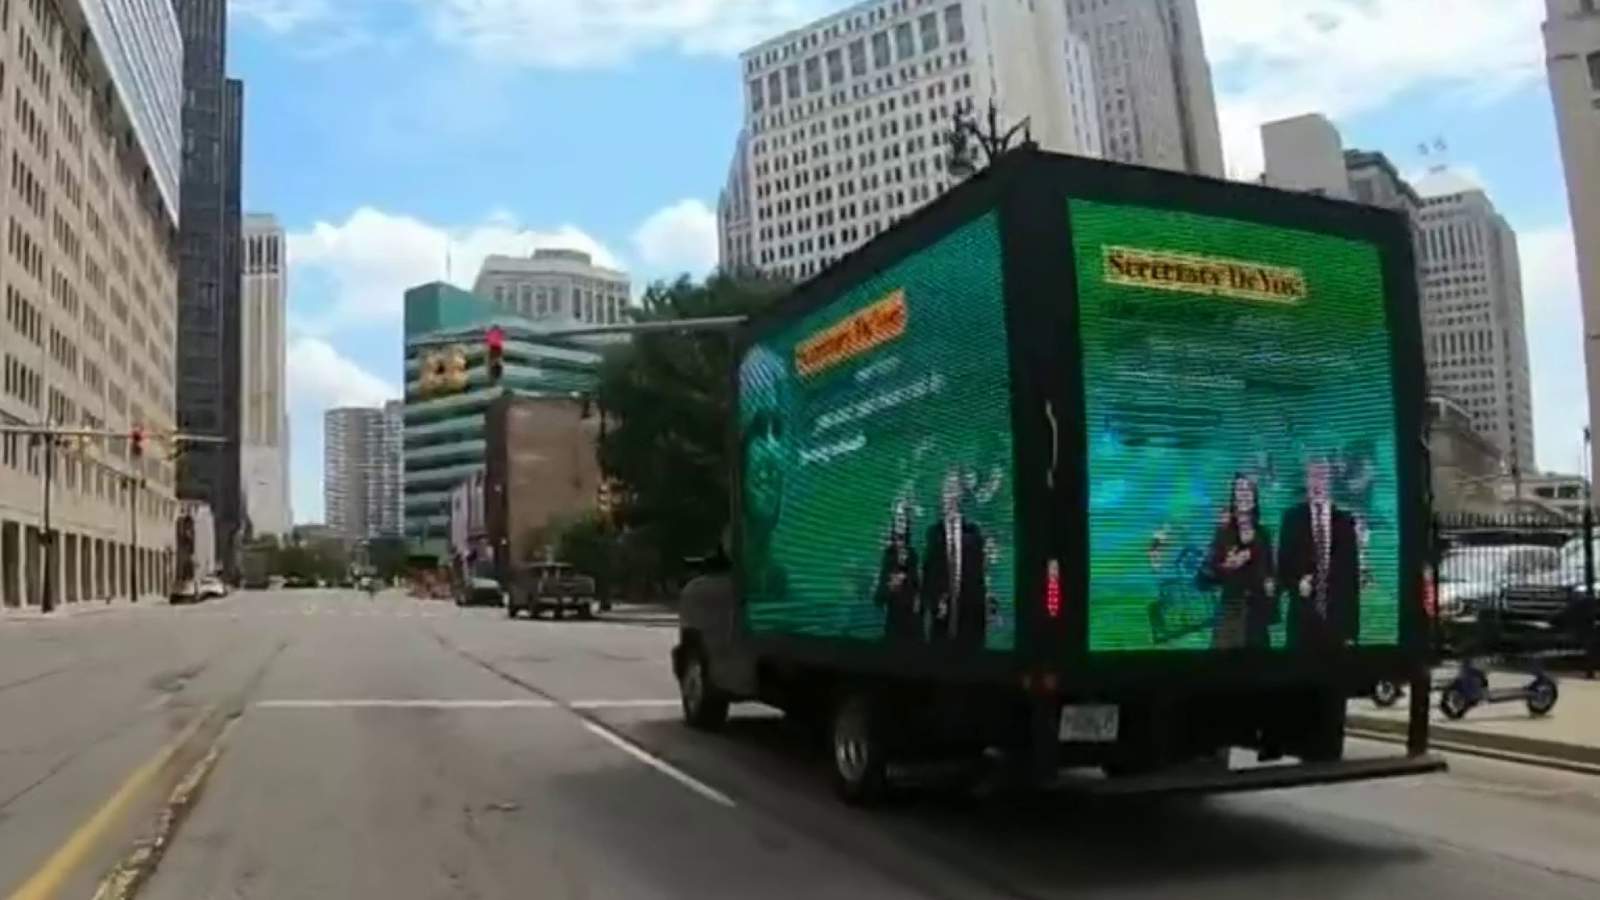 Mobile billboard spotted in Detroit slams Betsy DeVos over school reopening plans